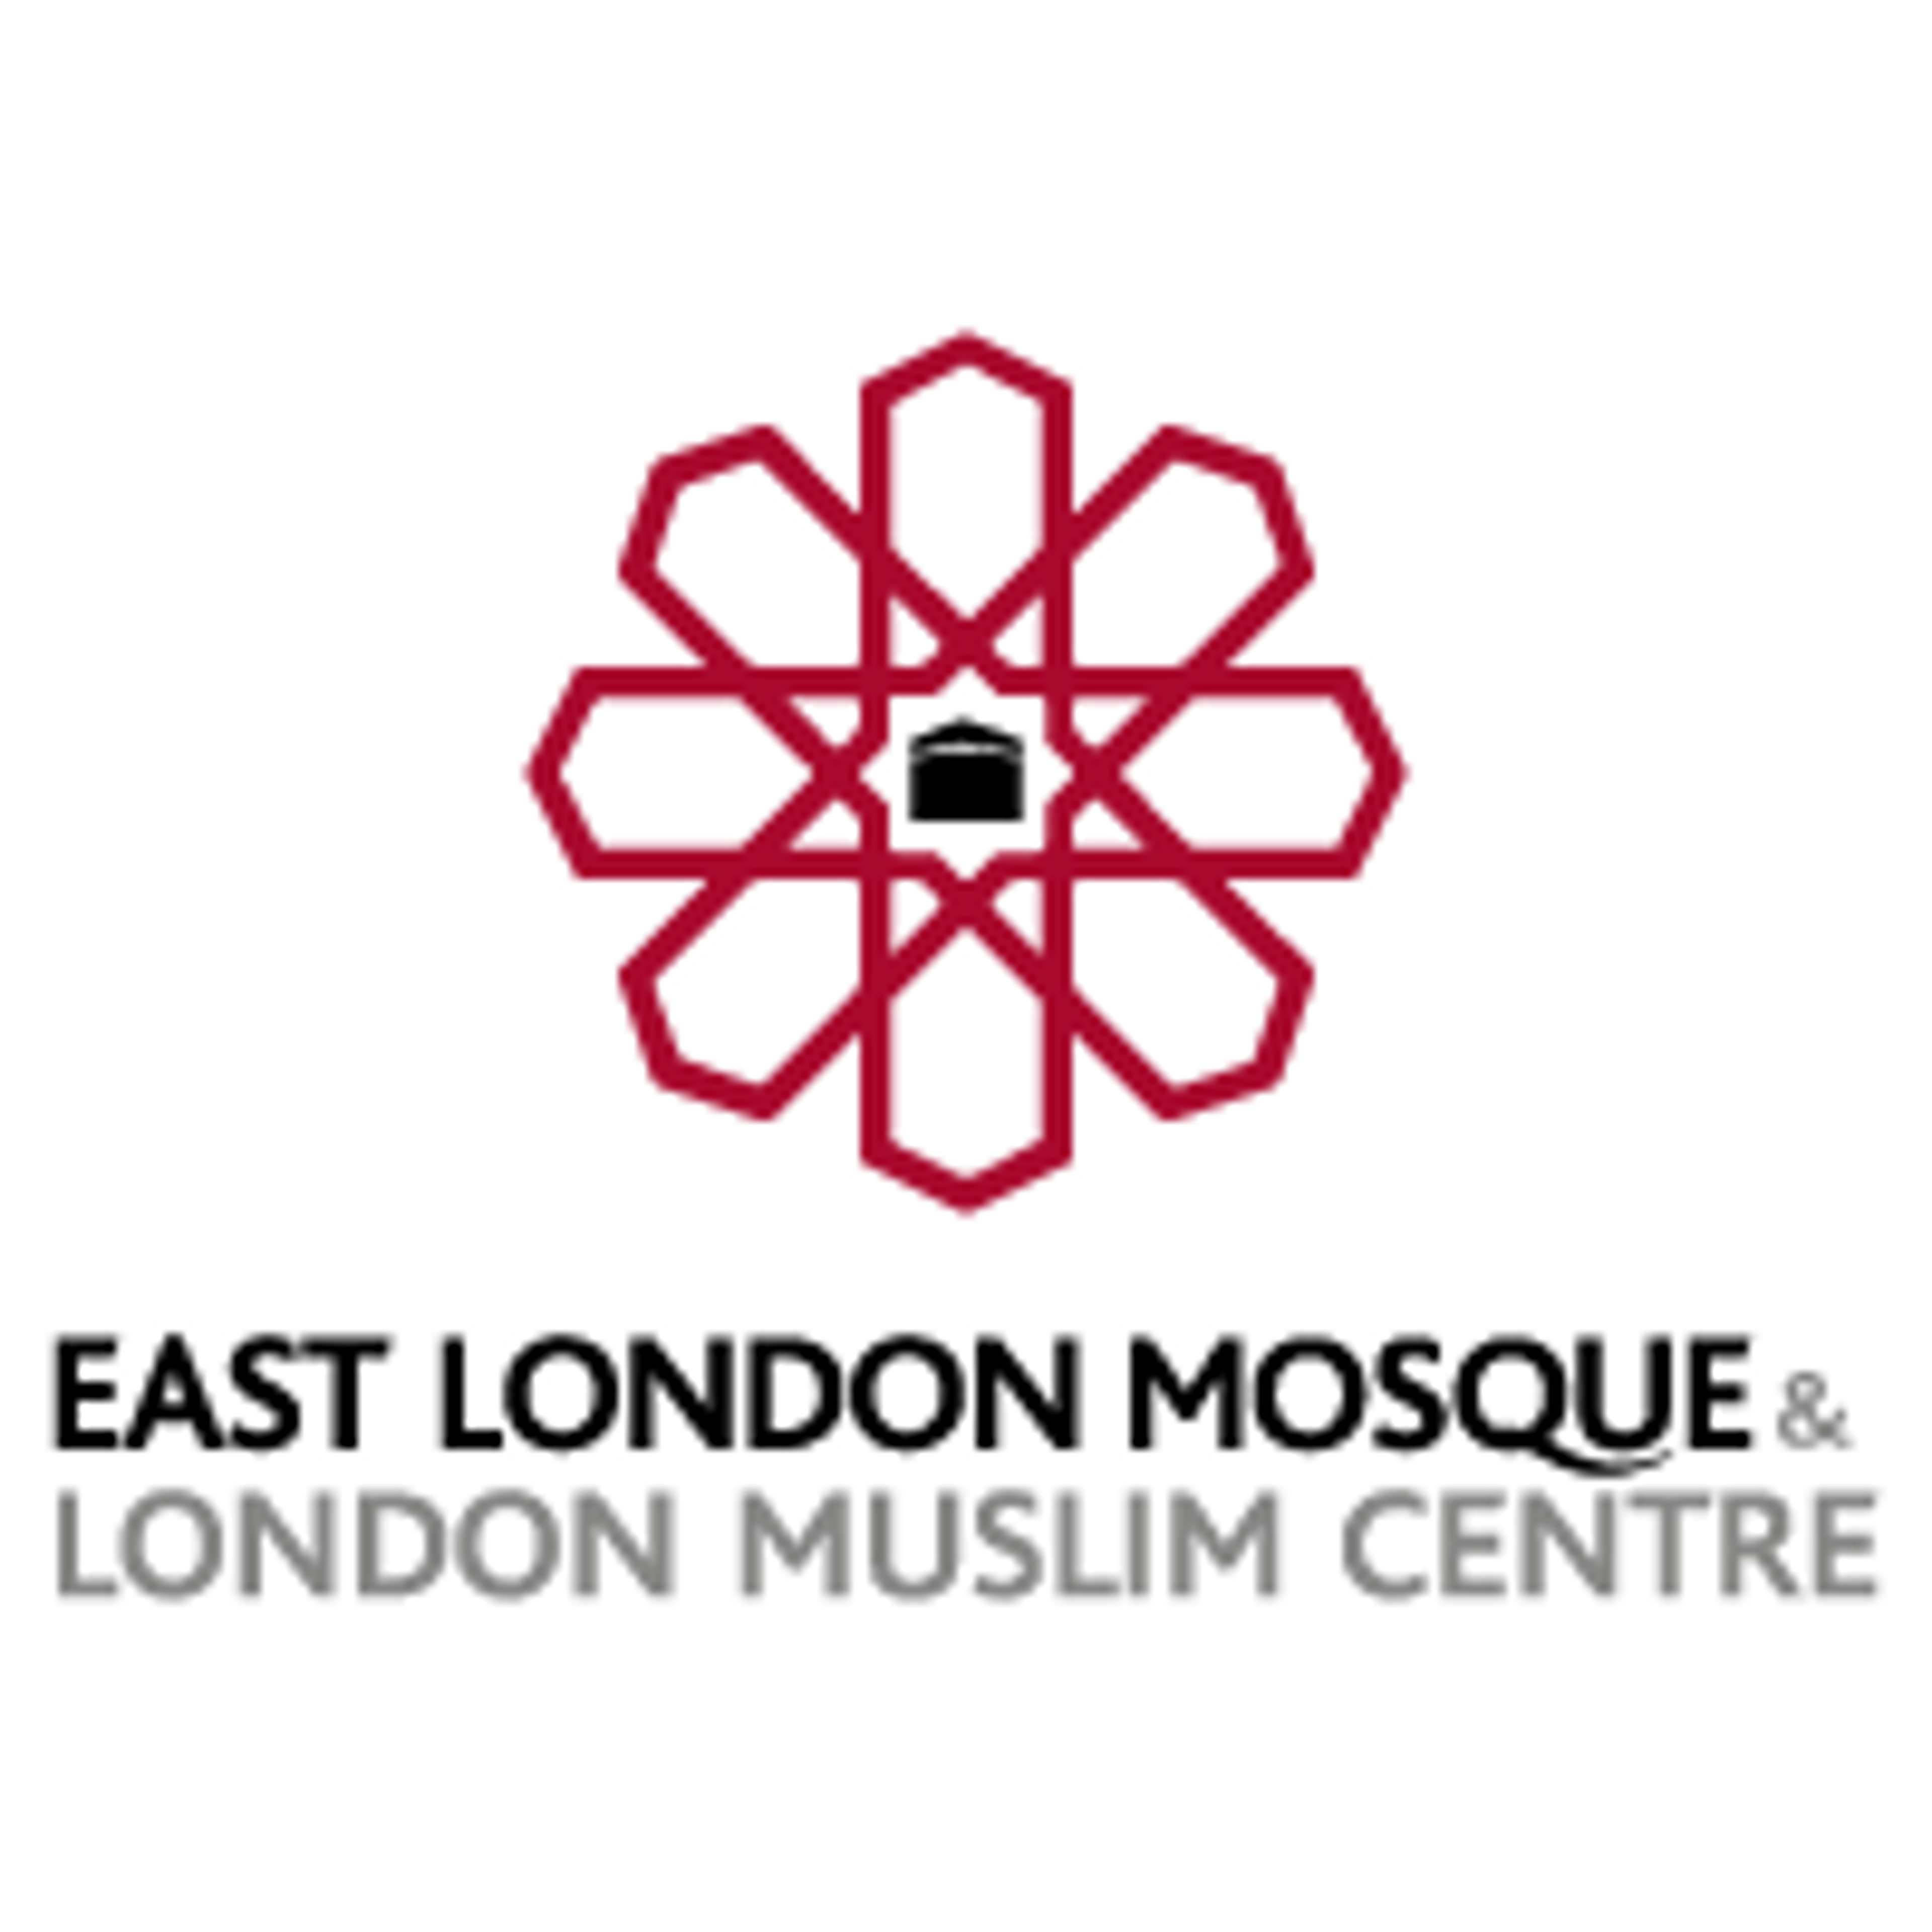 The East London Mosque & London Muslim Centre 